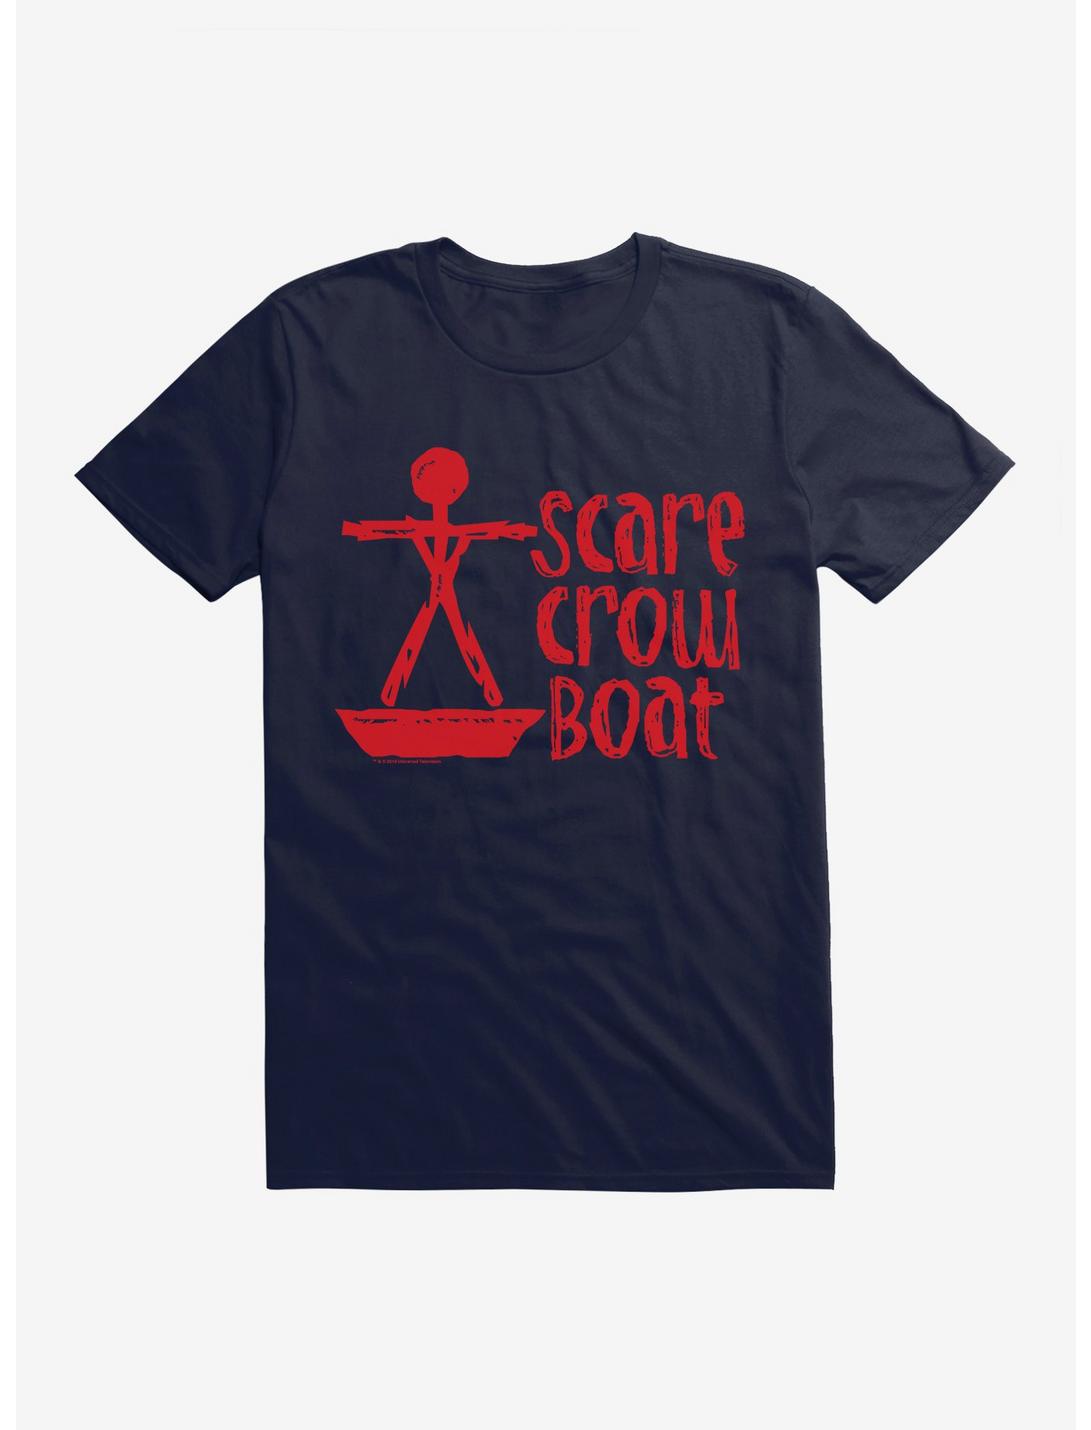 SCARECROW BOAT BAND T-Shirt PARKS REC RECREATION Mens/Unisex 14 color options